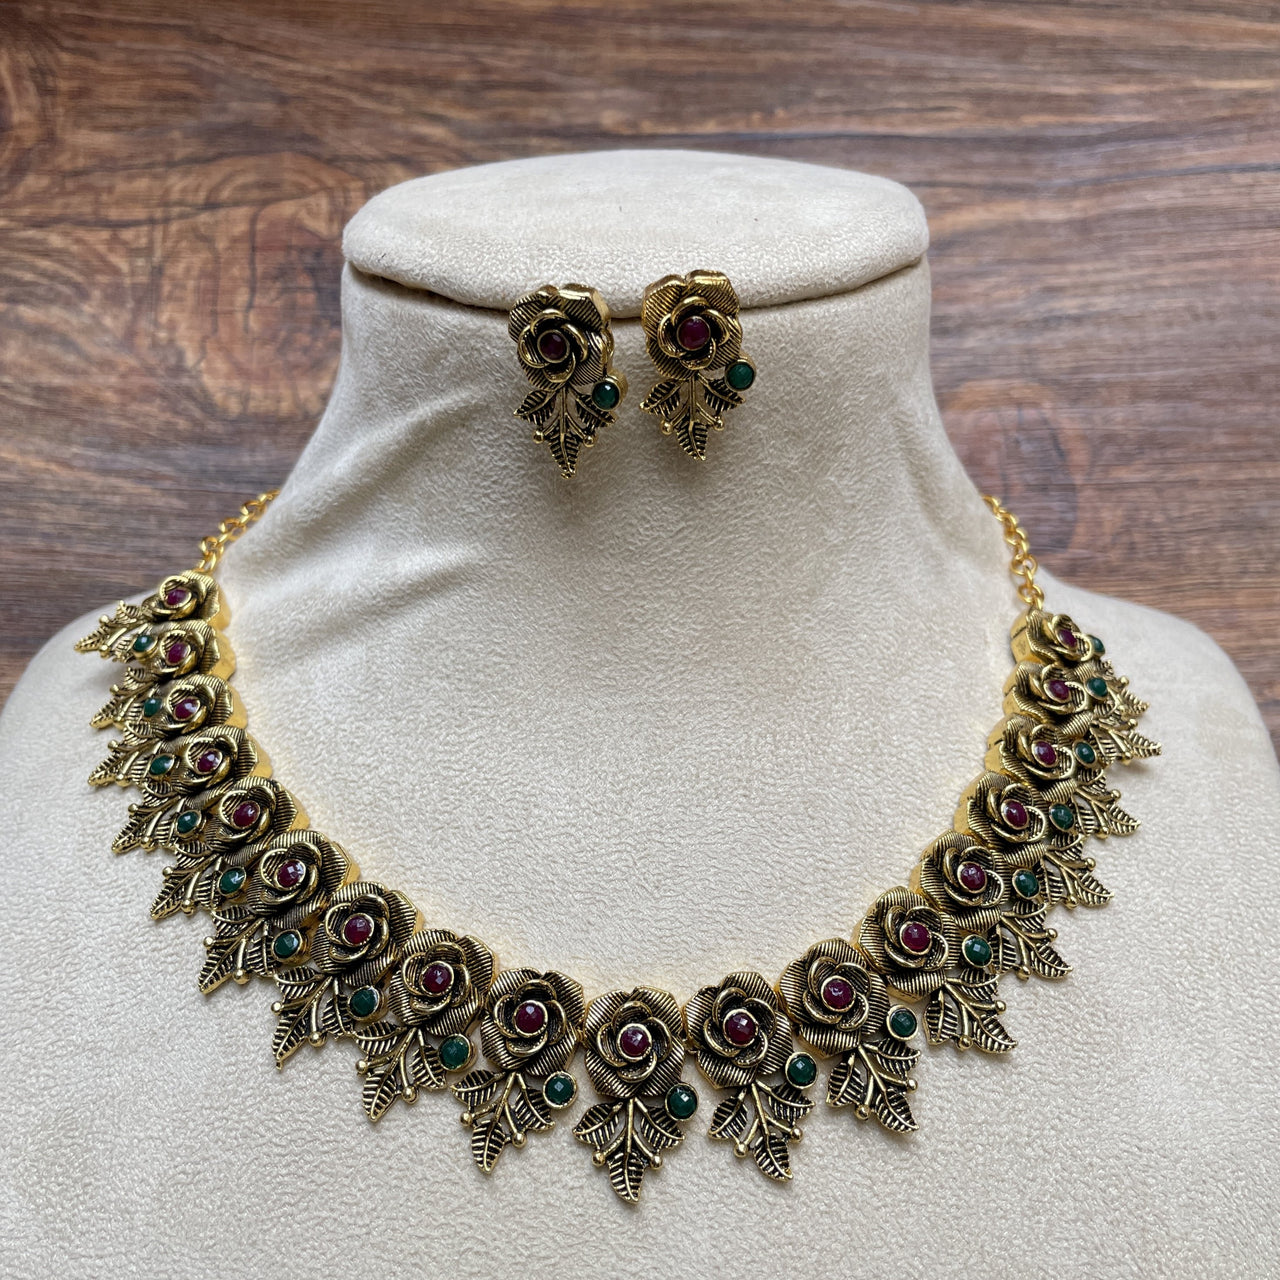 Beautiful Antique Rose Golden Necklace